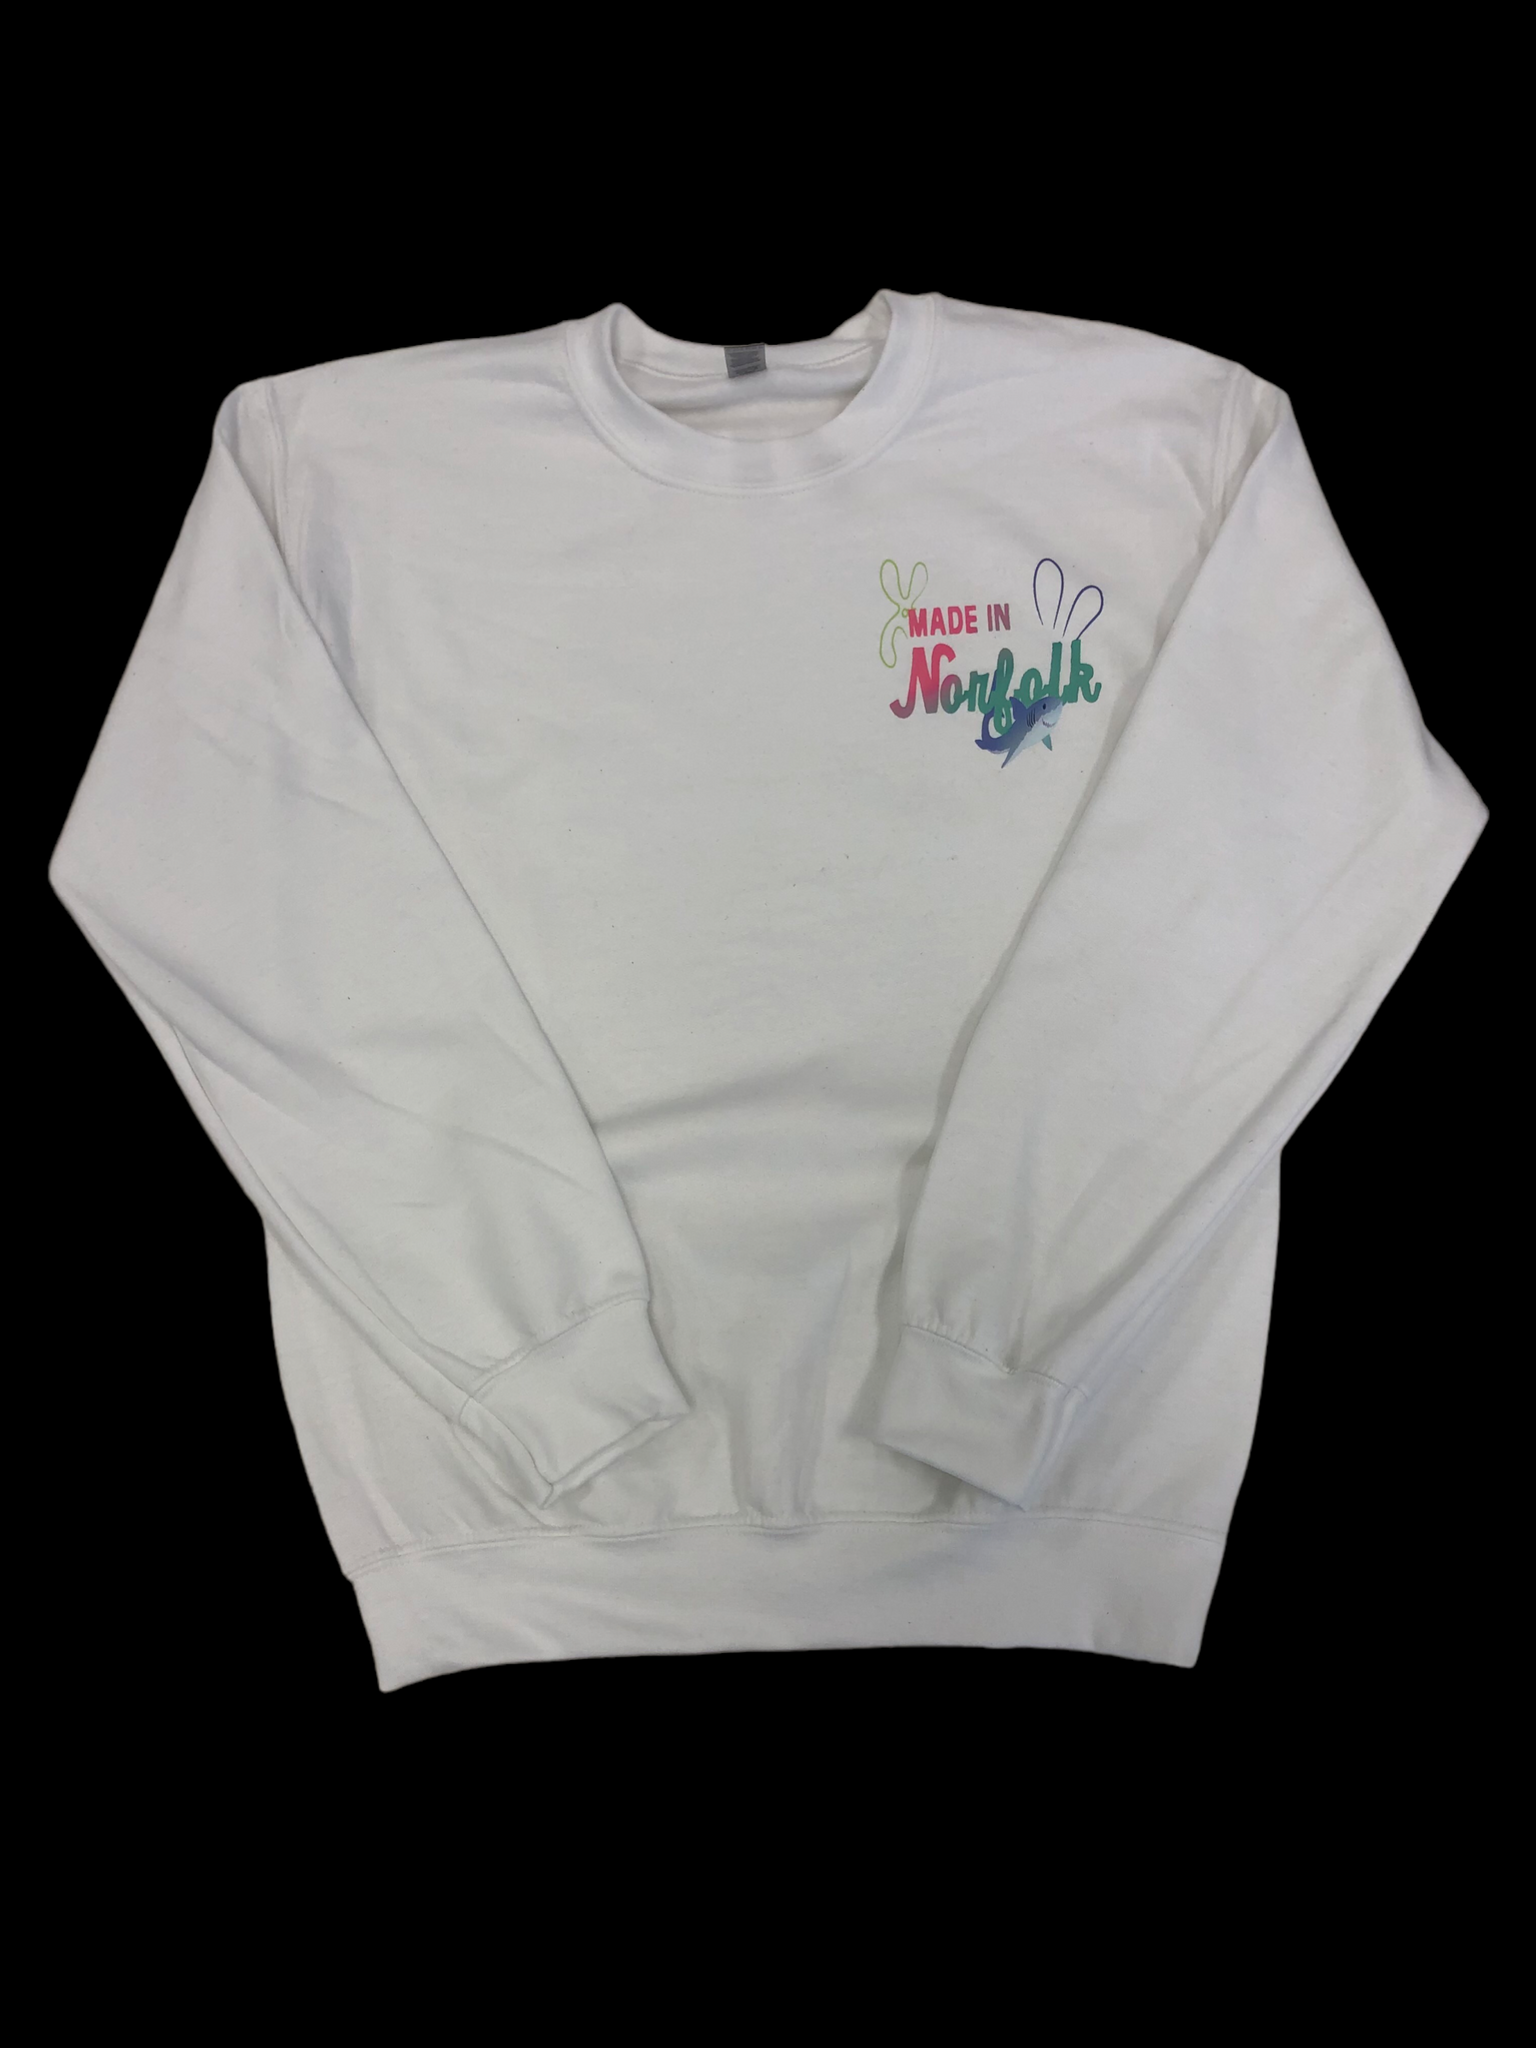 Made In Norfolk “Under The Sea” Crewneck Sweatshirt